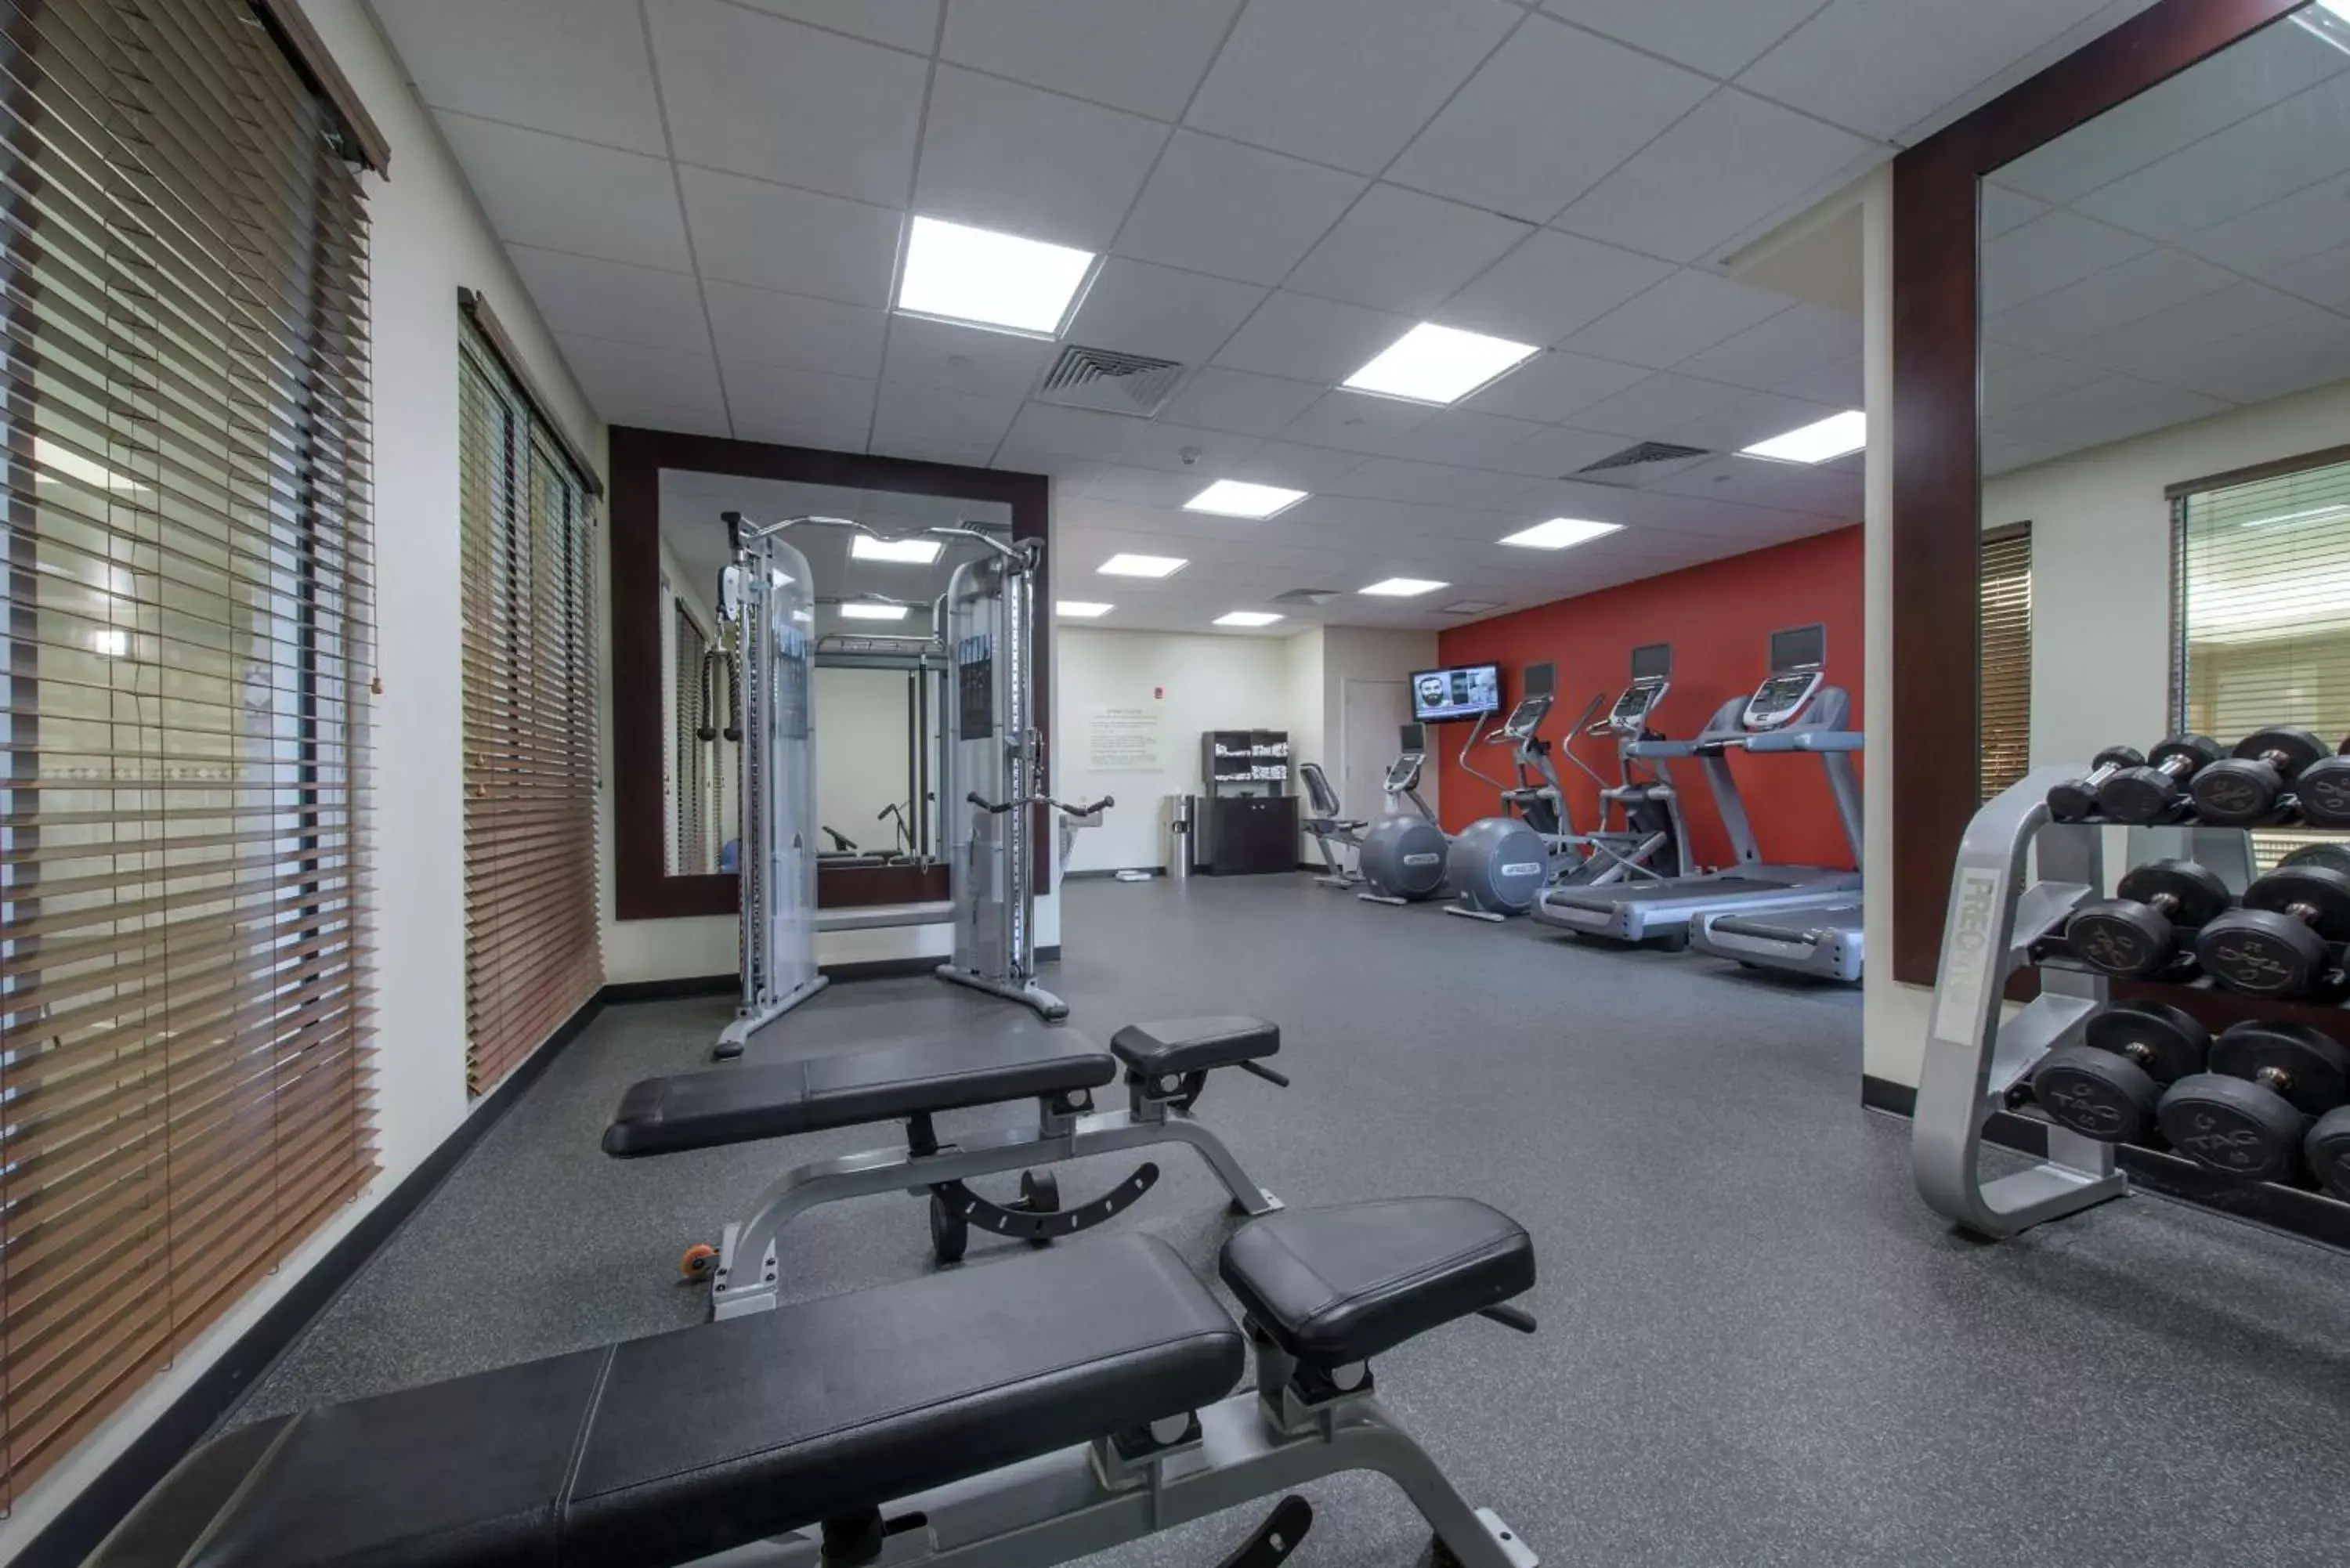 Fitness centre/facilities, Fitness Center/Facilities in Hilton Garden Inn Devens Common